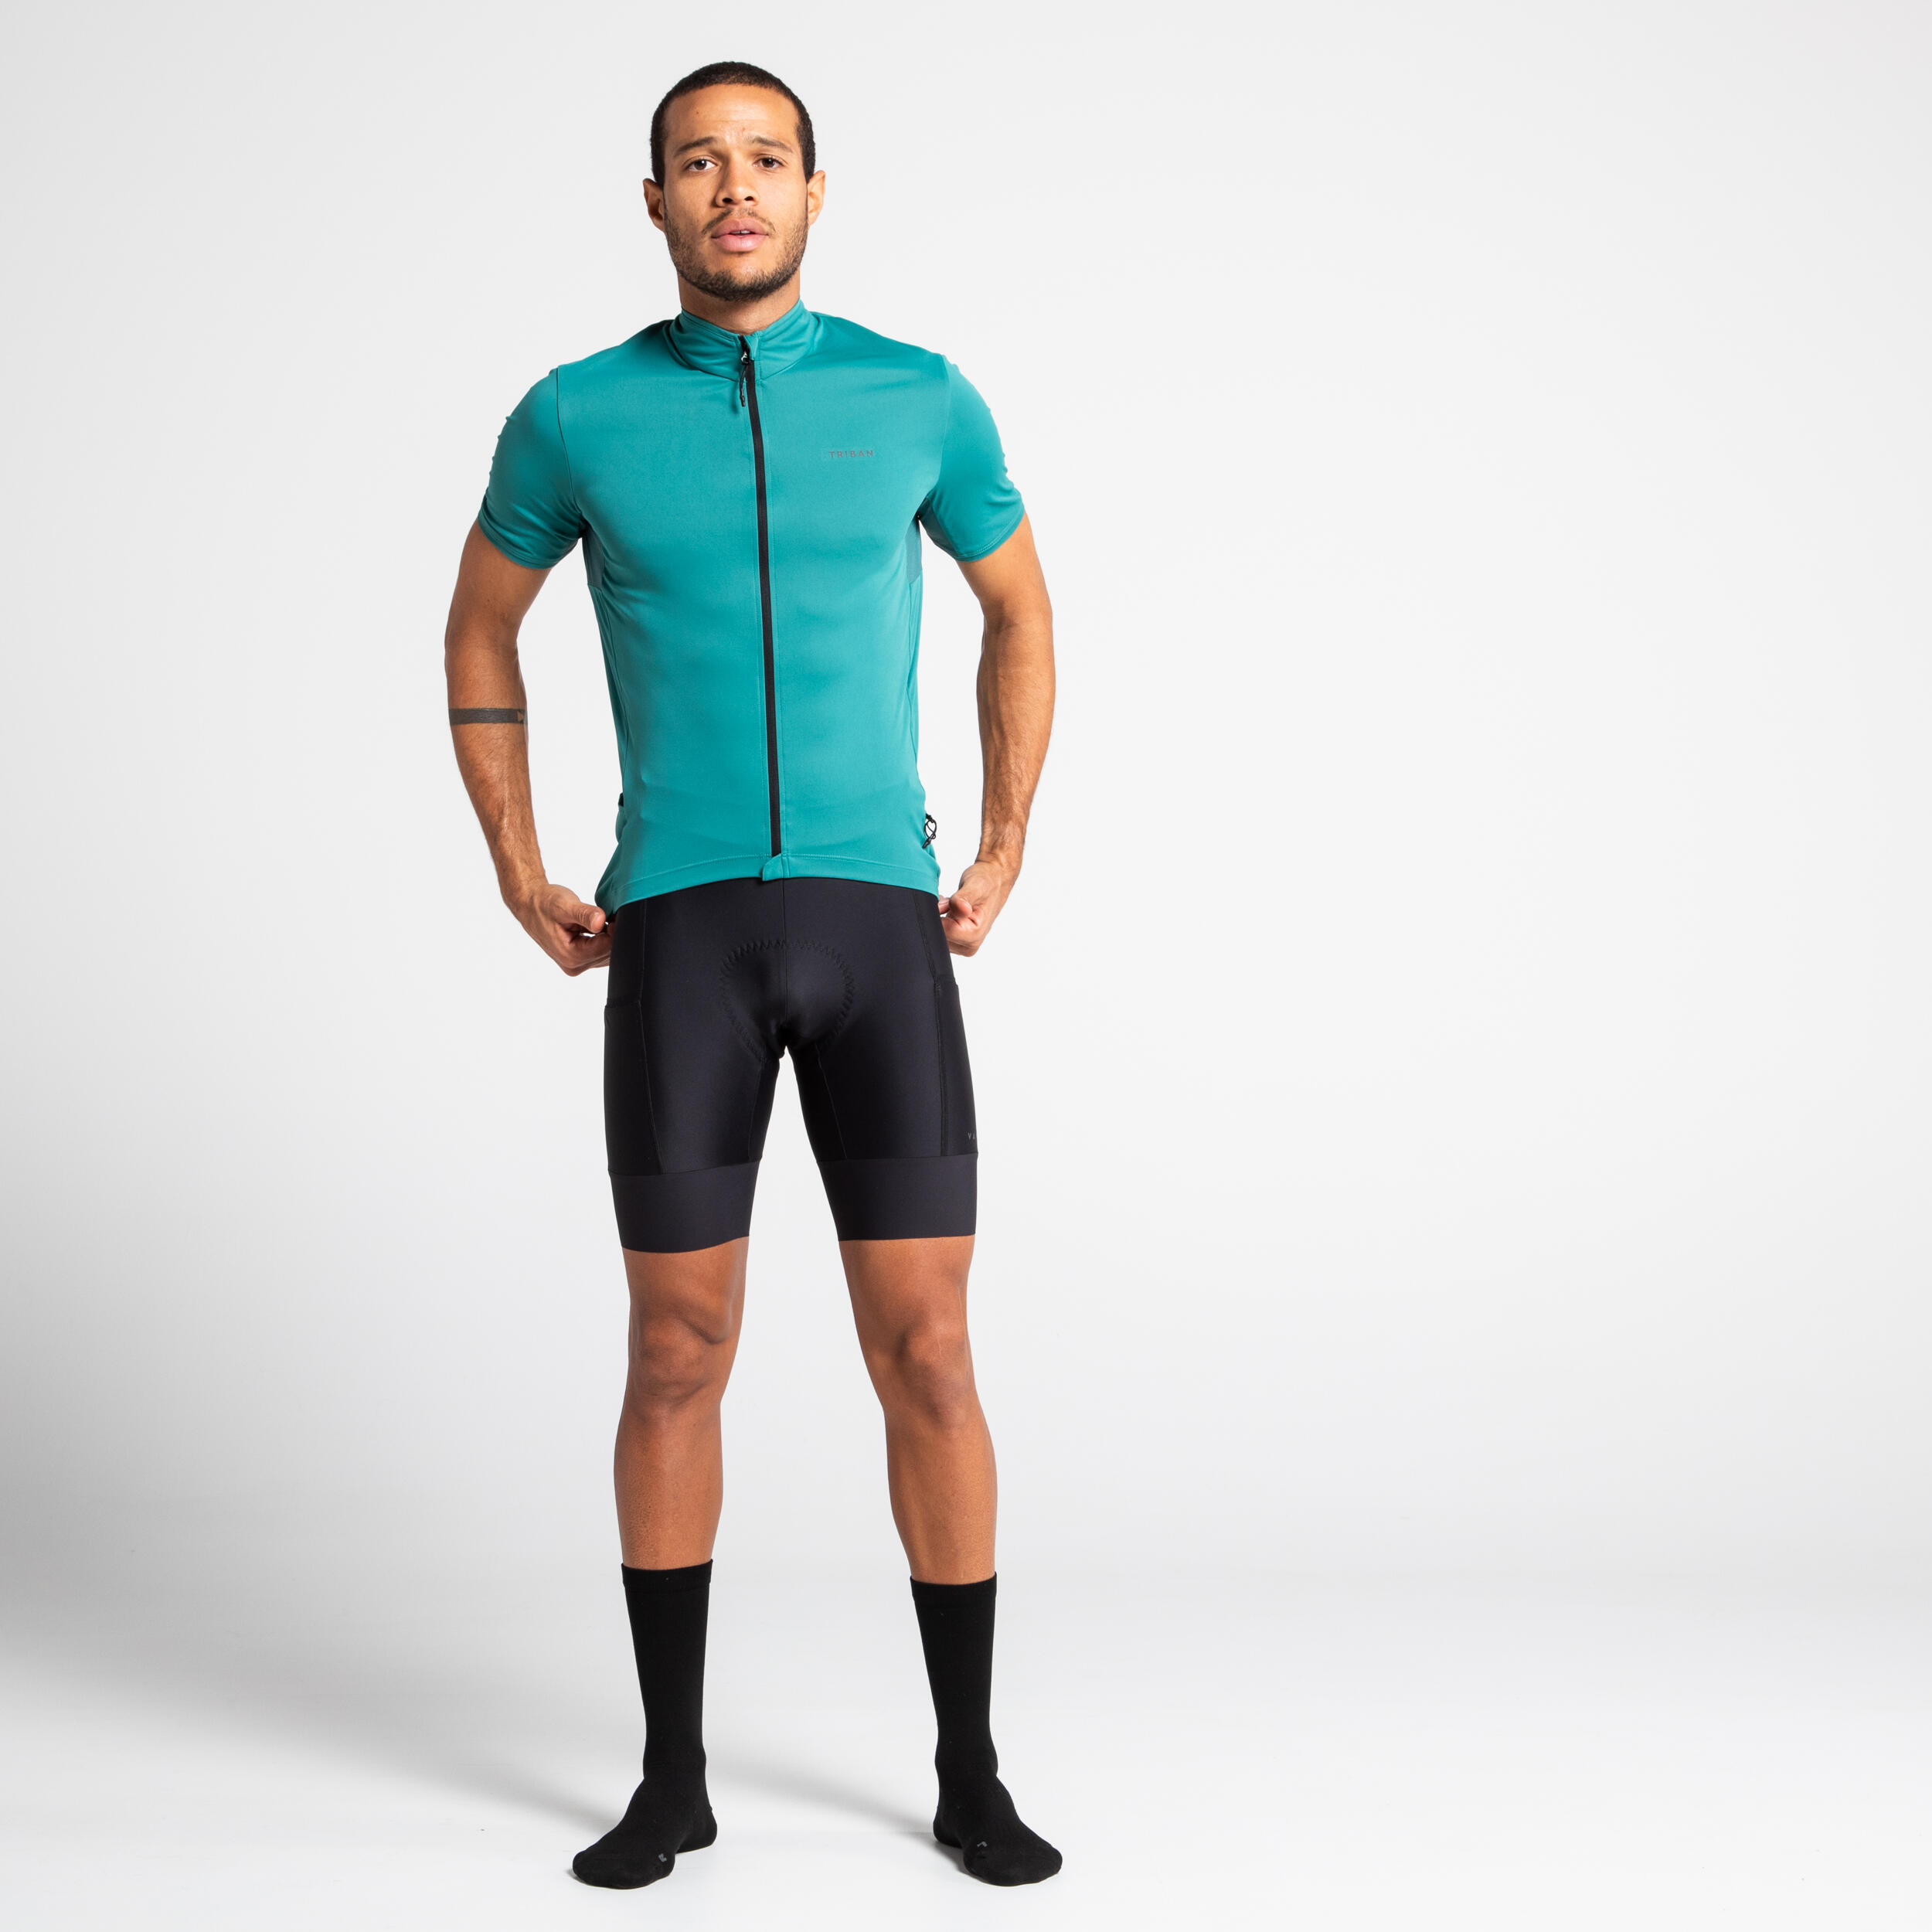 Men's Short-Sleeved Road Cycling Summer Jersey RC500 - Emerald Green 13/15